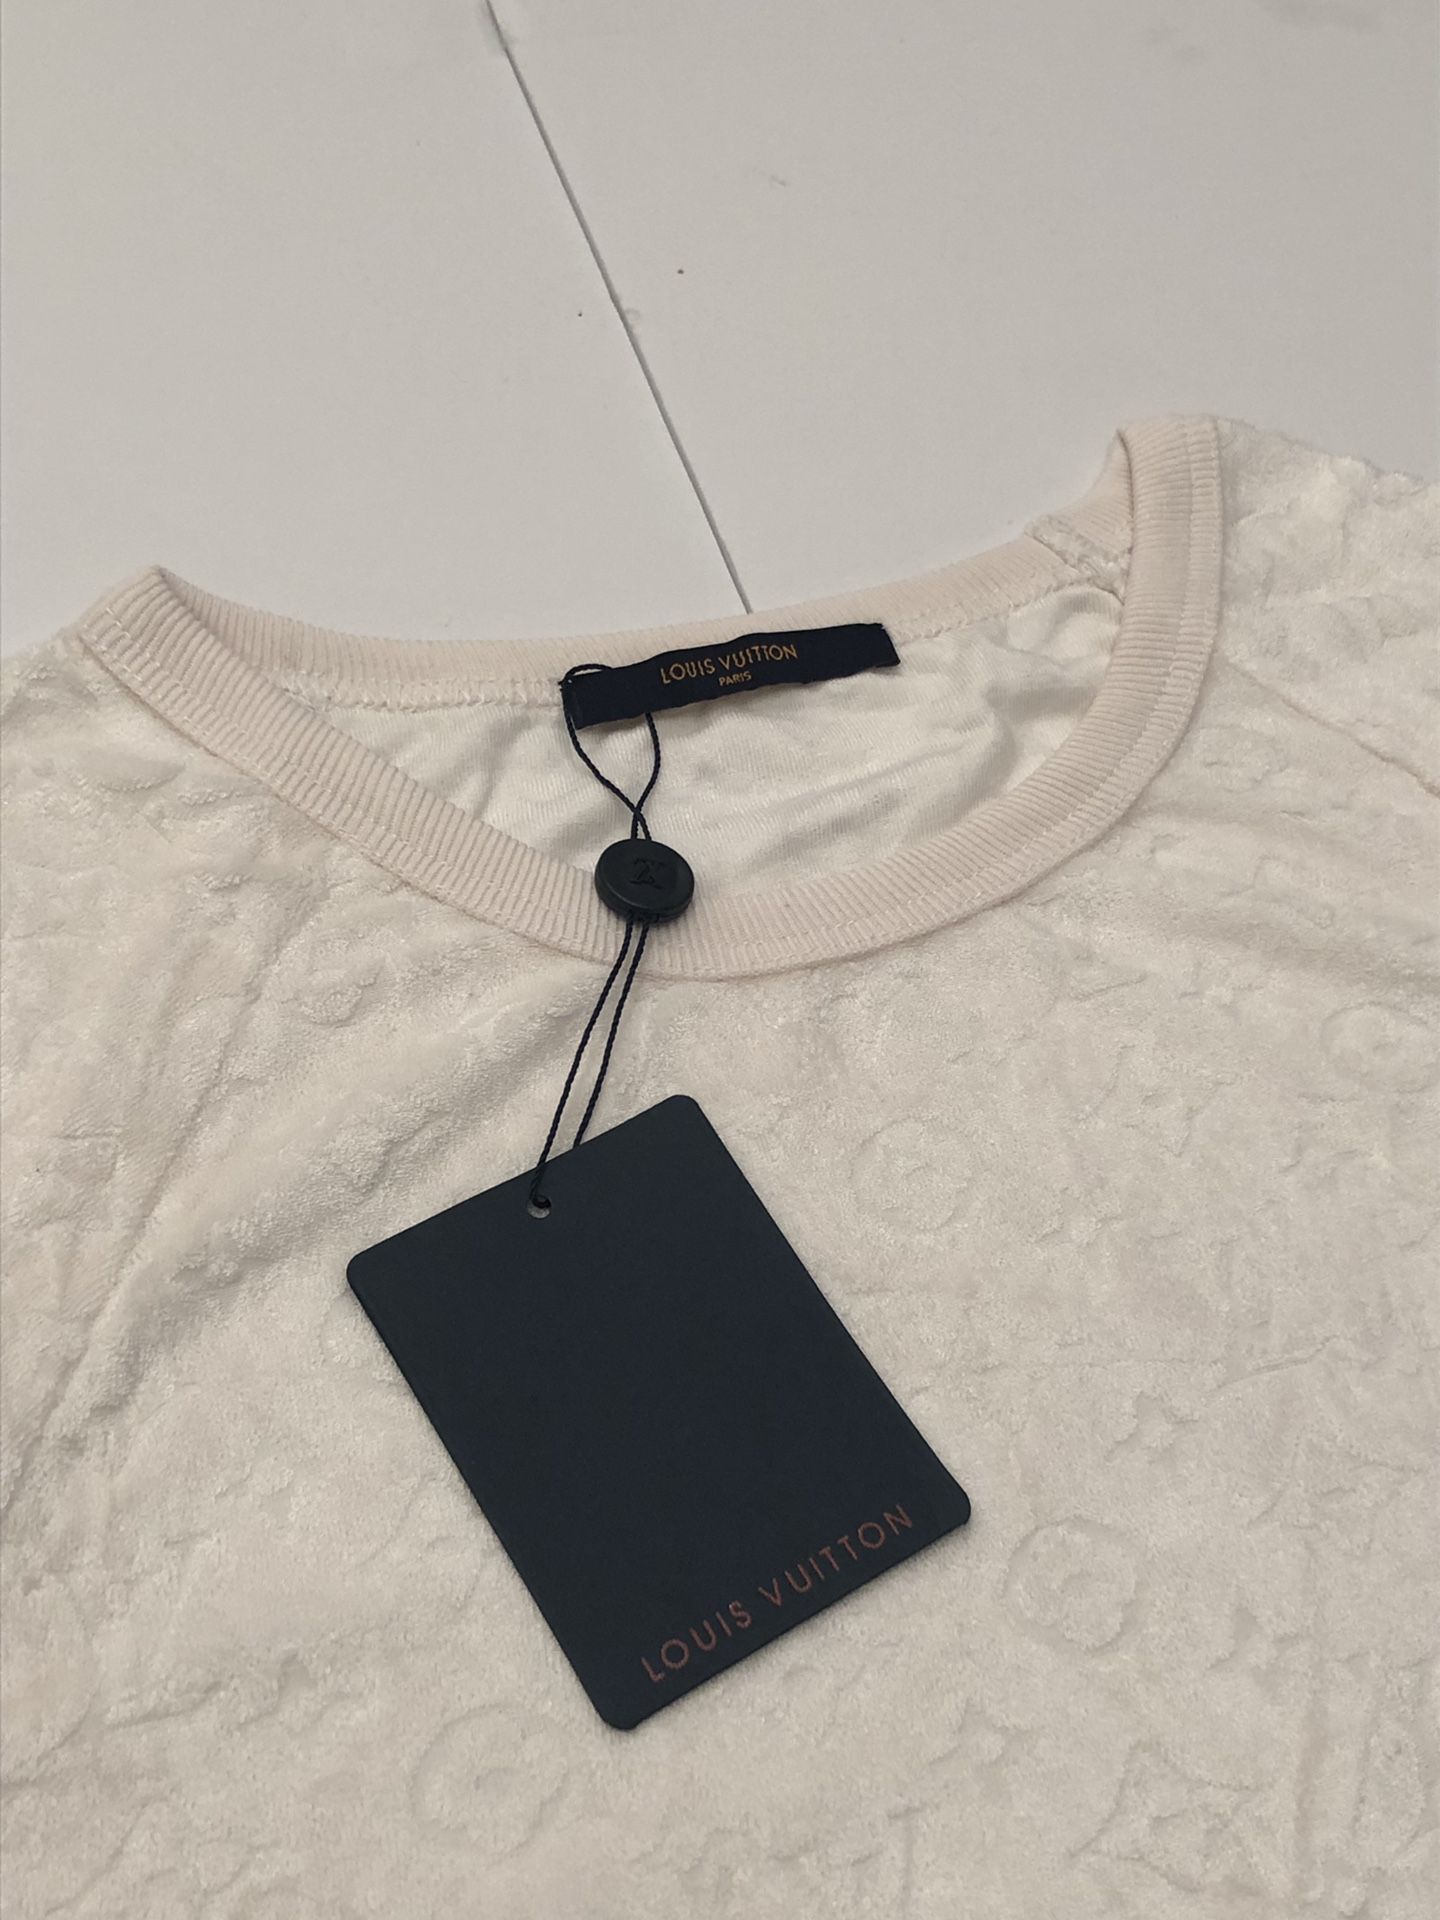 Louis Vuitton Iconic Collars Shirt